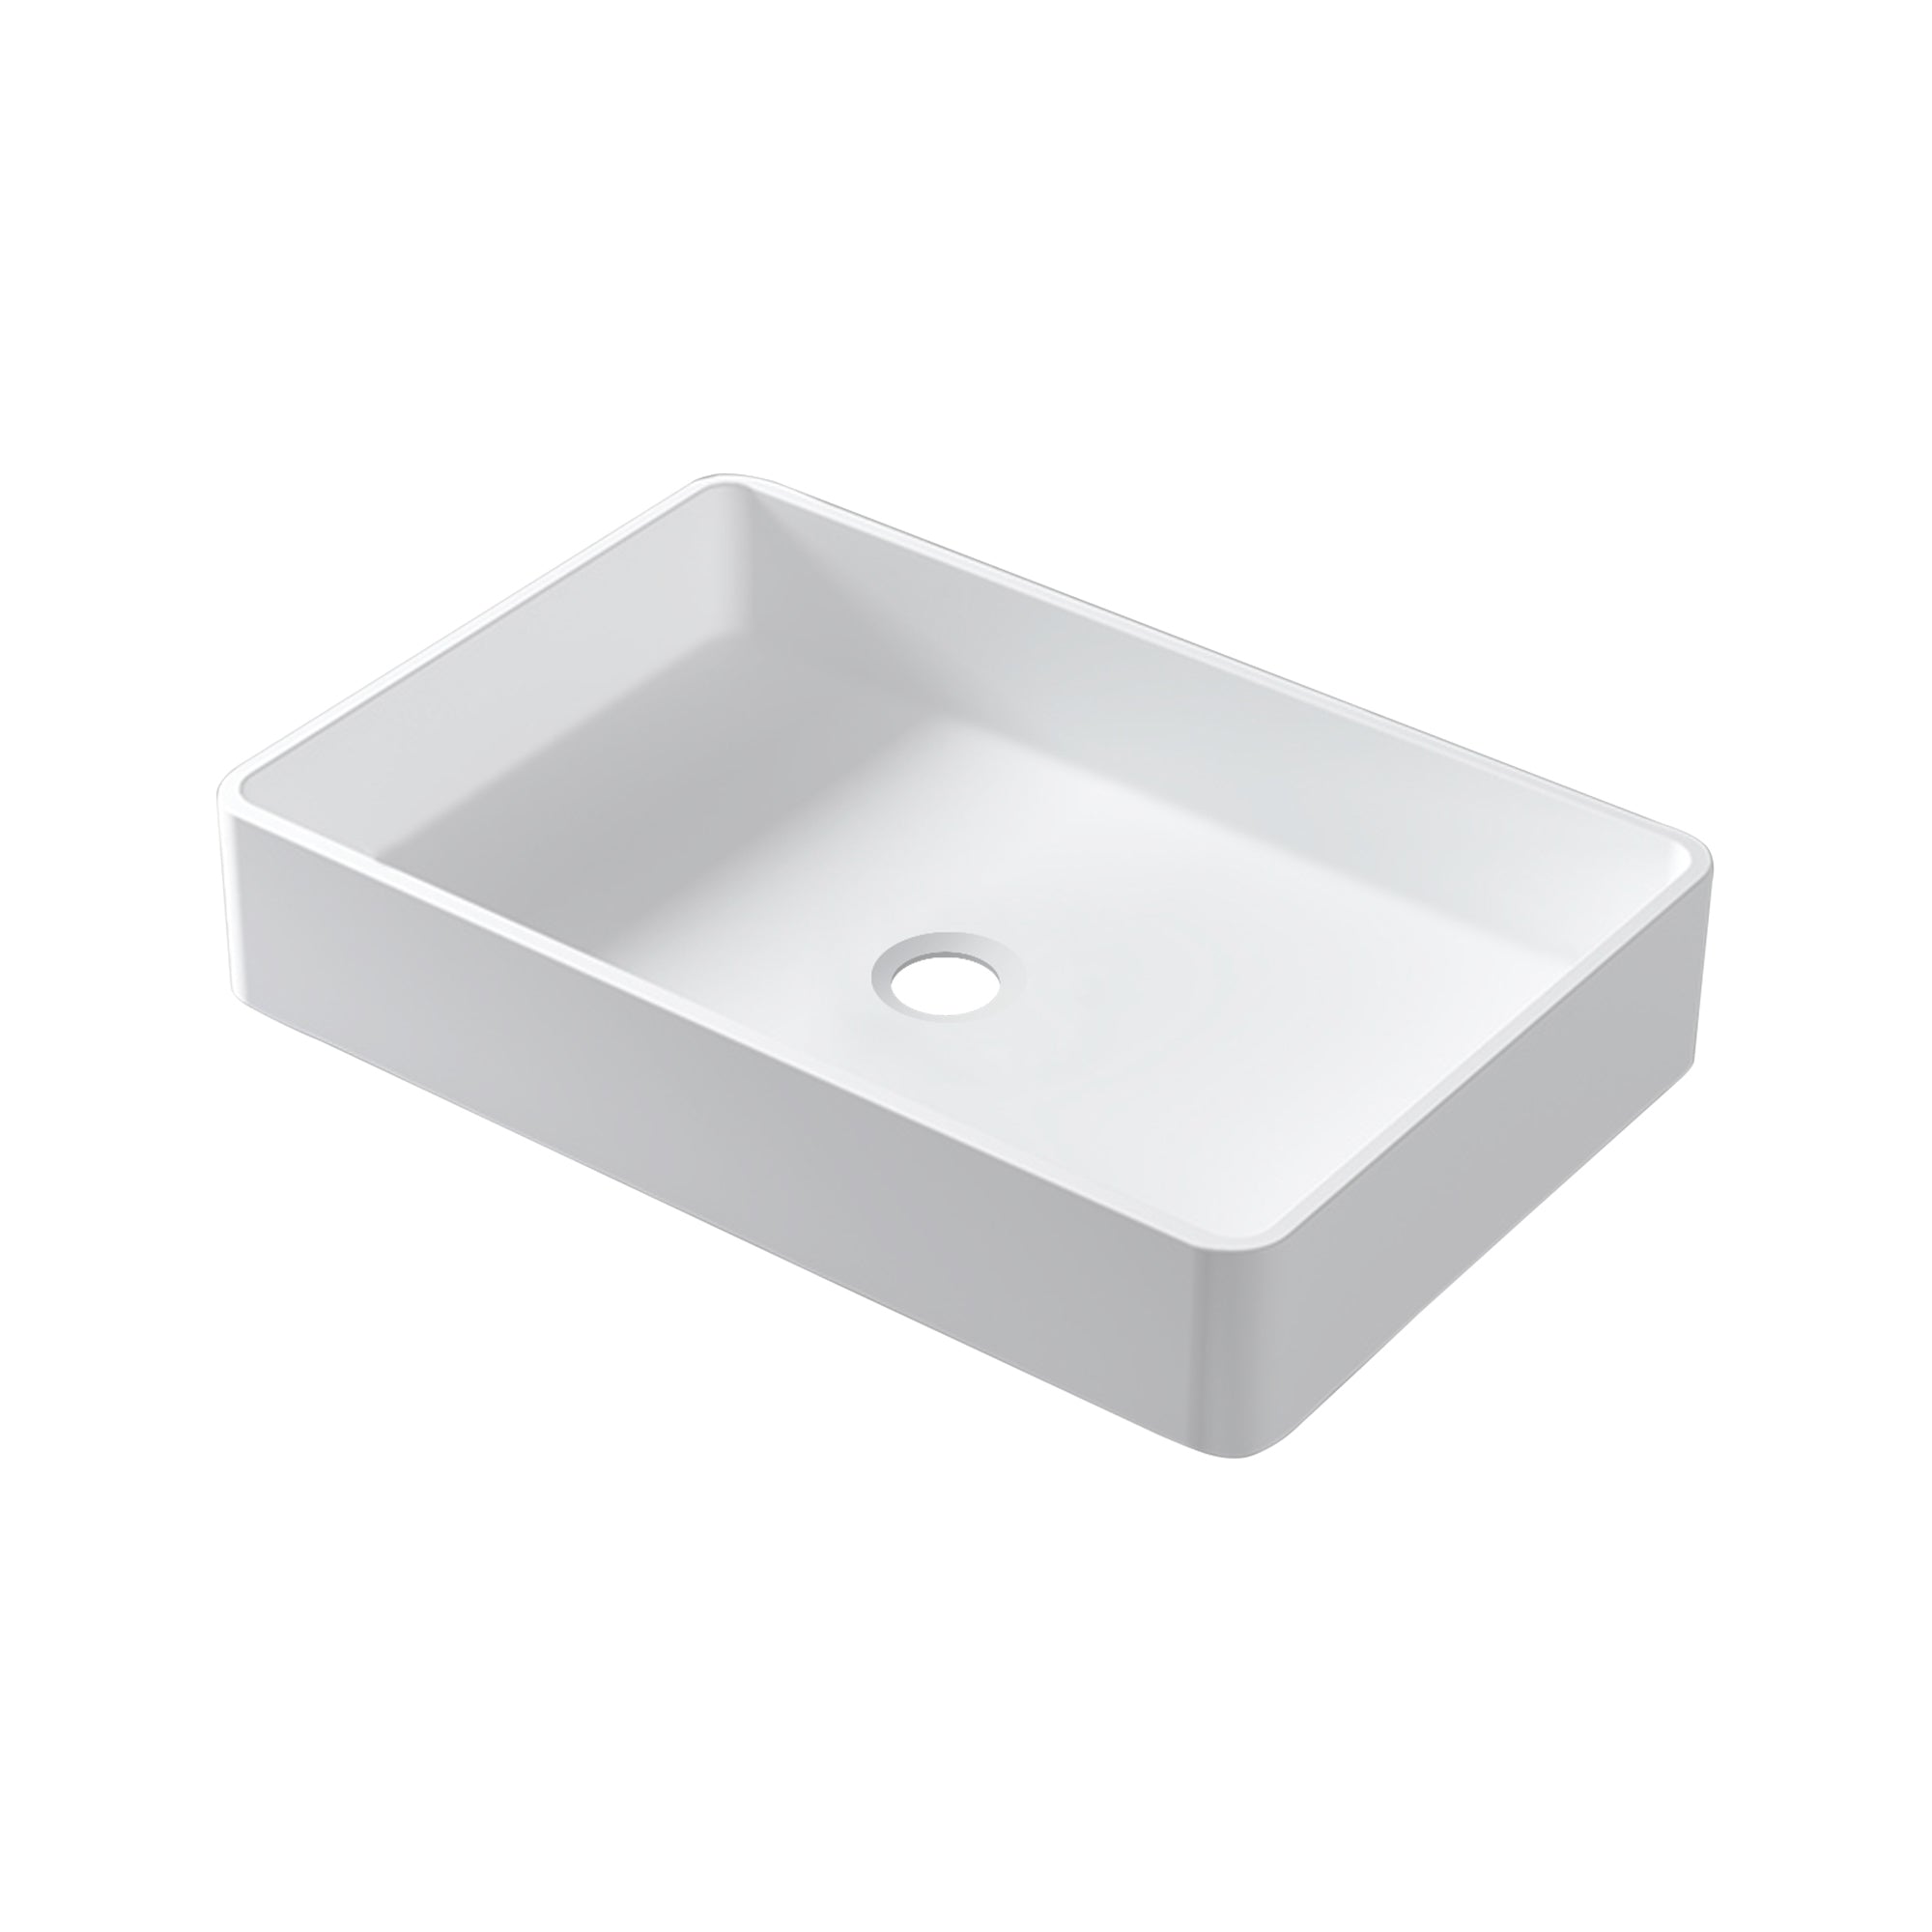 Solid Surface Wash Basin Bathroom Vessel Sink in White-Arrisea